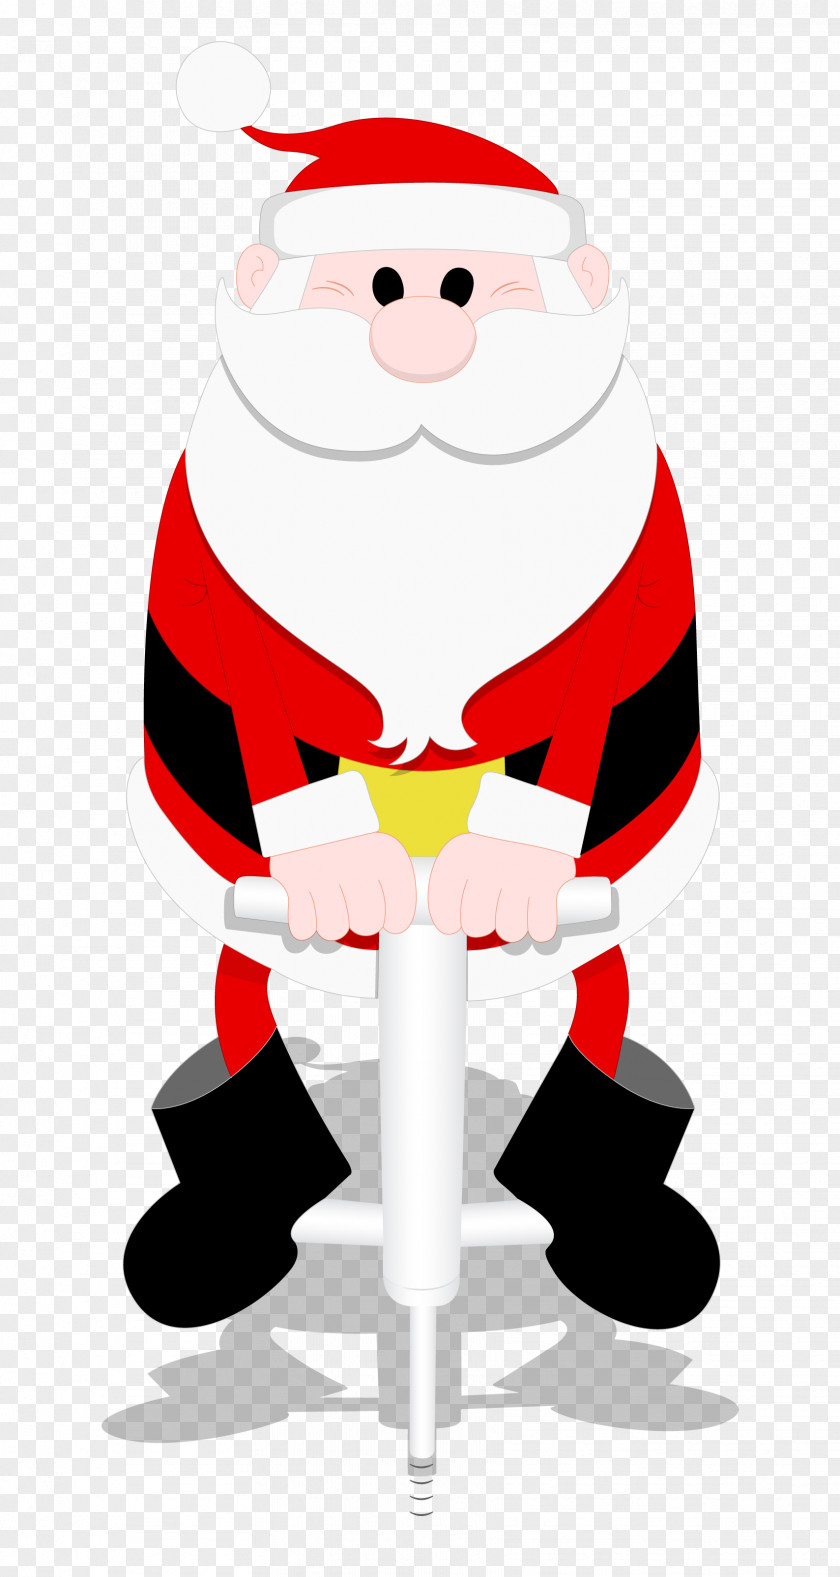 Santa Claus Riding A Spring Bump Drawing Caricature Illustration PNG